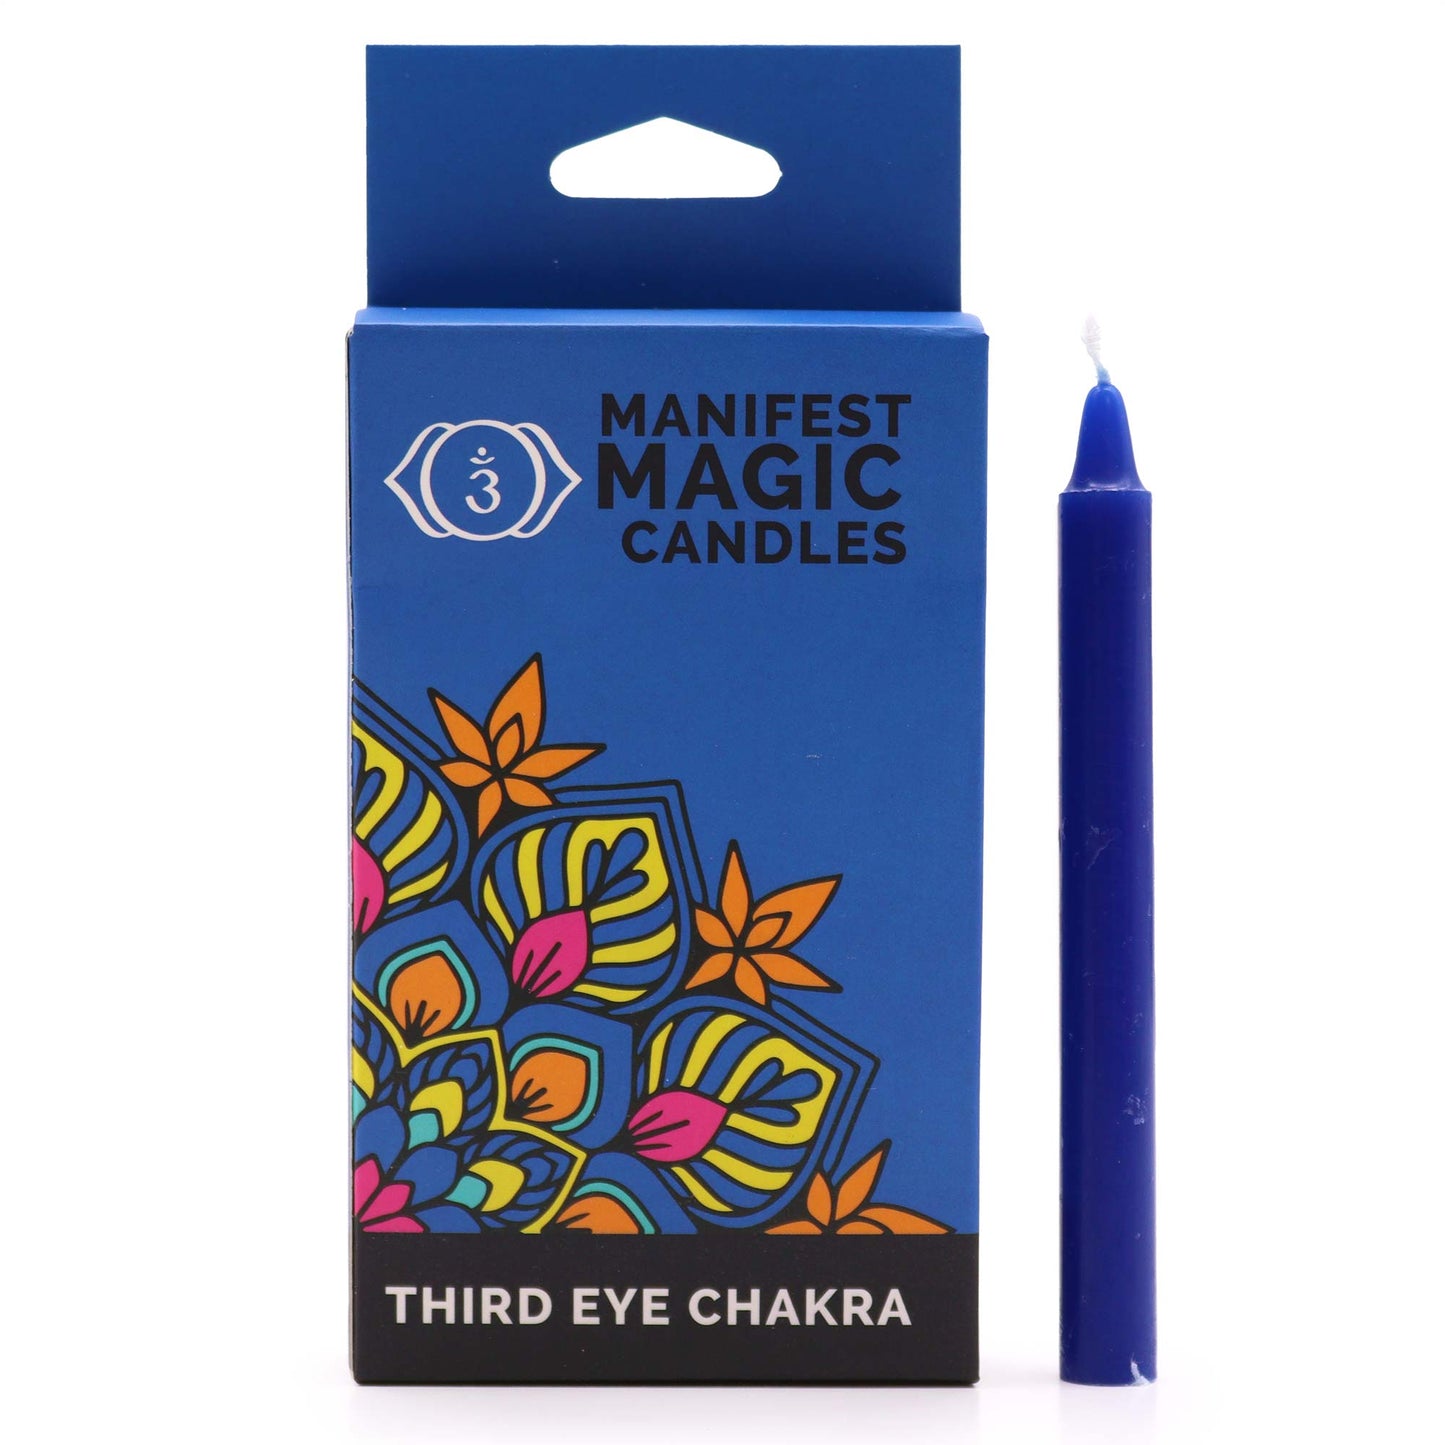 Manifest Magic Candles - Third Eye Chakra